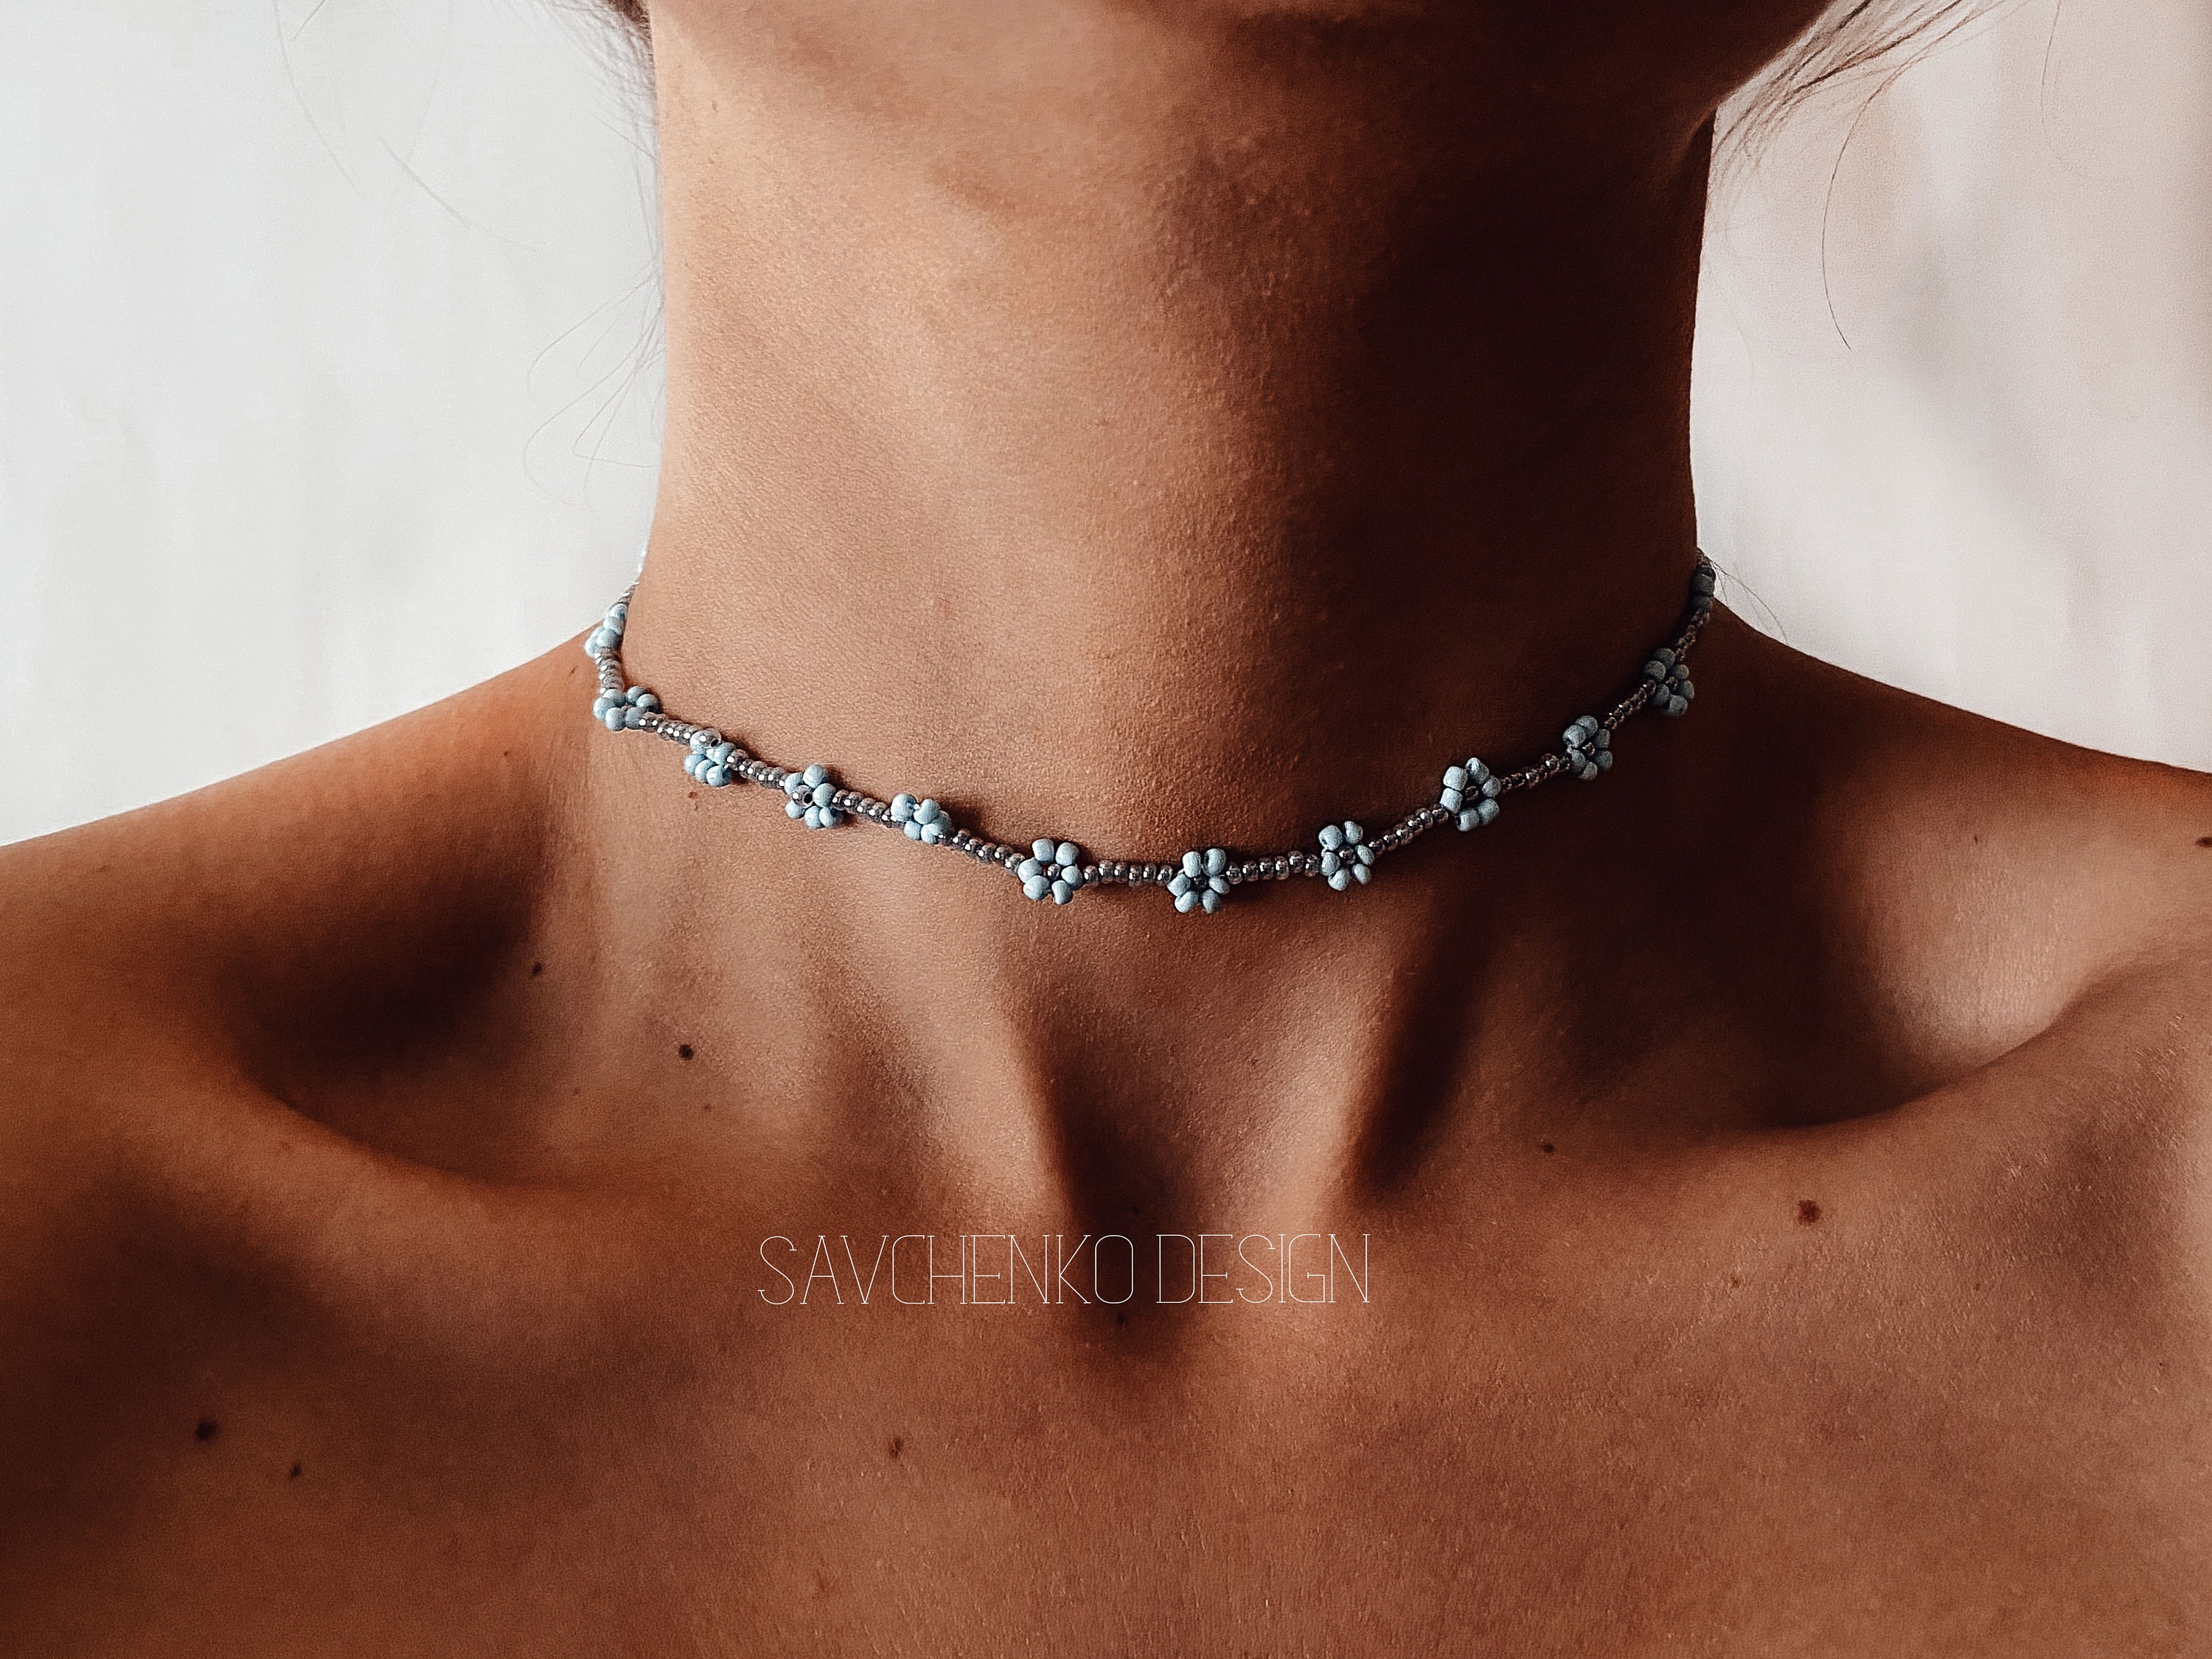 Blue flower beaded choker necklace